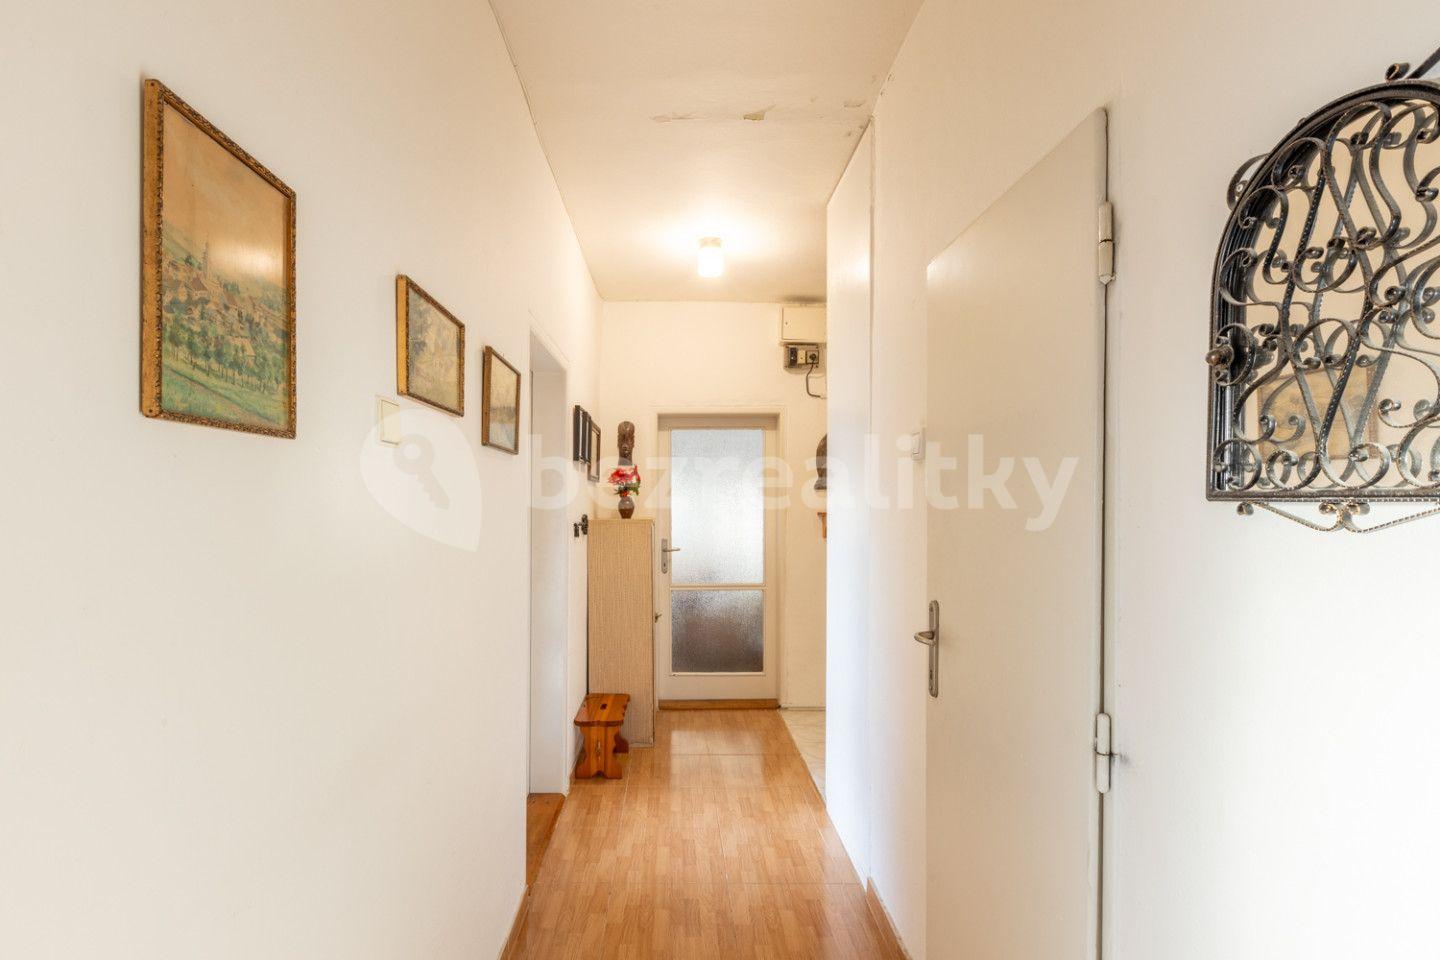 3 bedroom flat for sale, 69 m², Blažíčkova, Prague, Prague